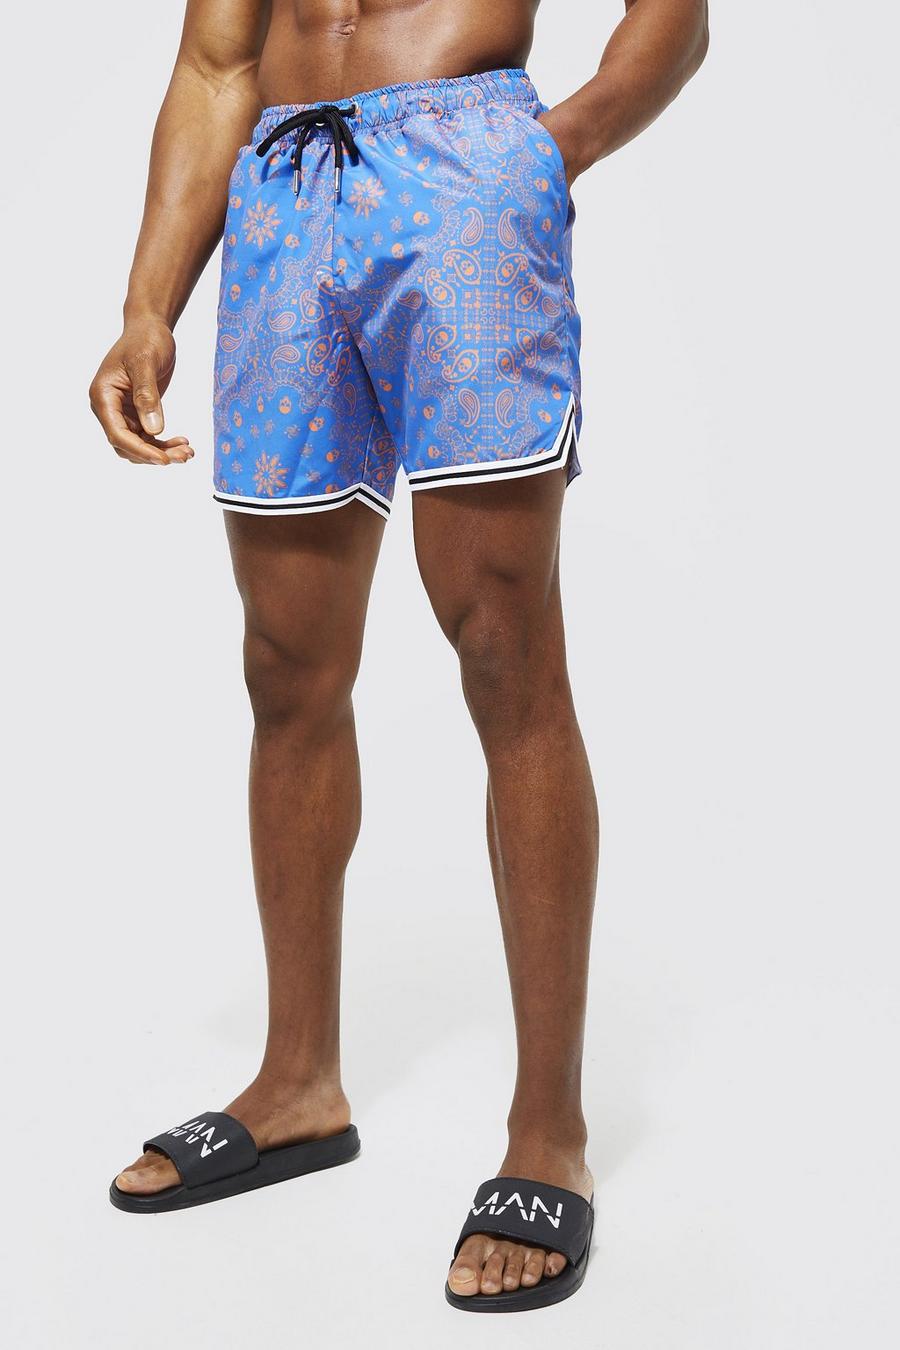 Cobalt bleu Mid Length Bandana Basketball Swim Shorts